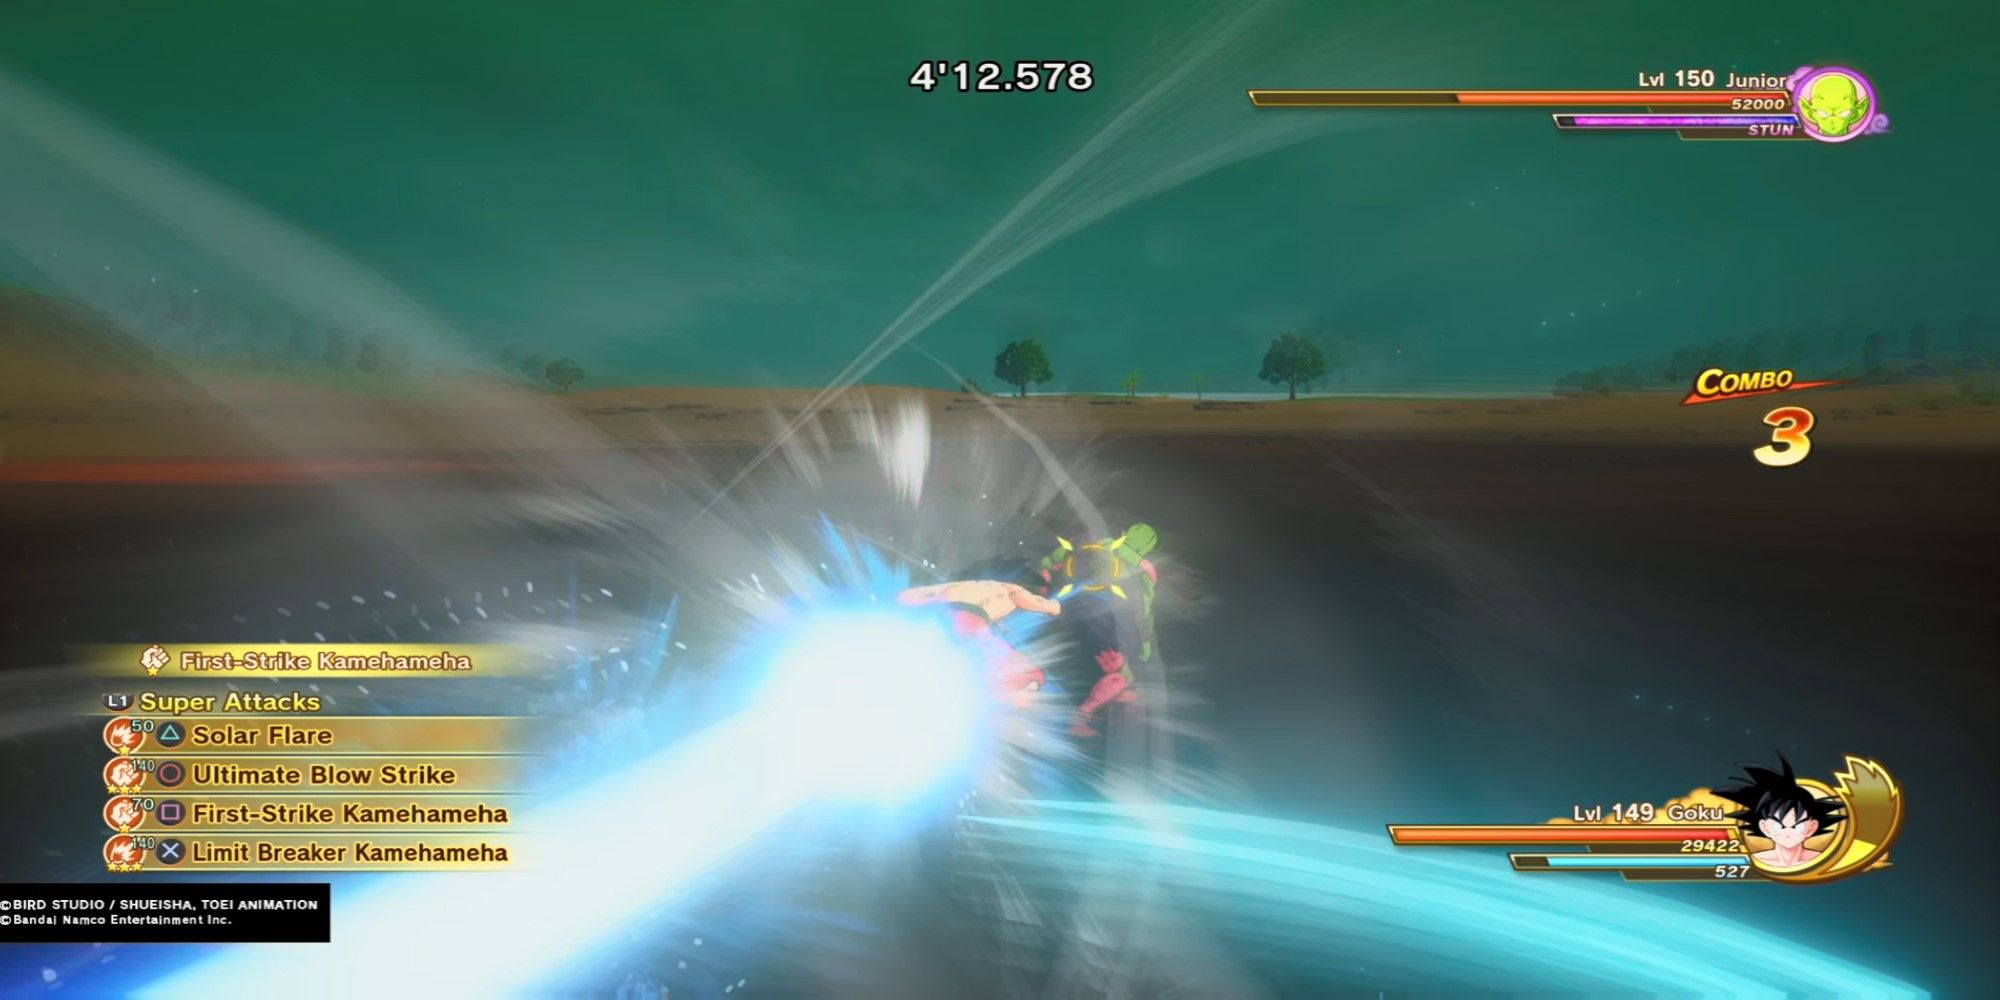 Dragon Ball Z Kakarot 23rd World Tournament DLC Kid Goku Using First-Strike Kamehameha Against Junior